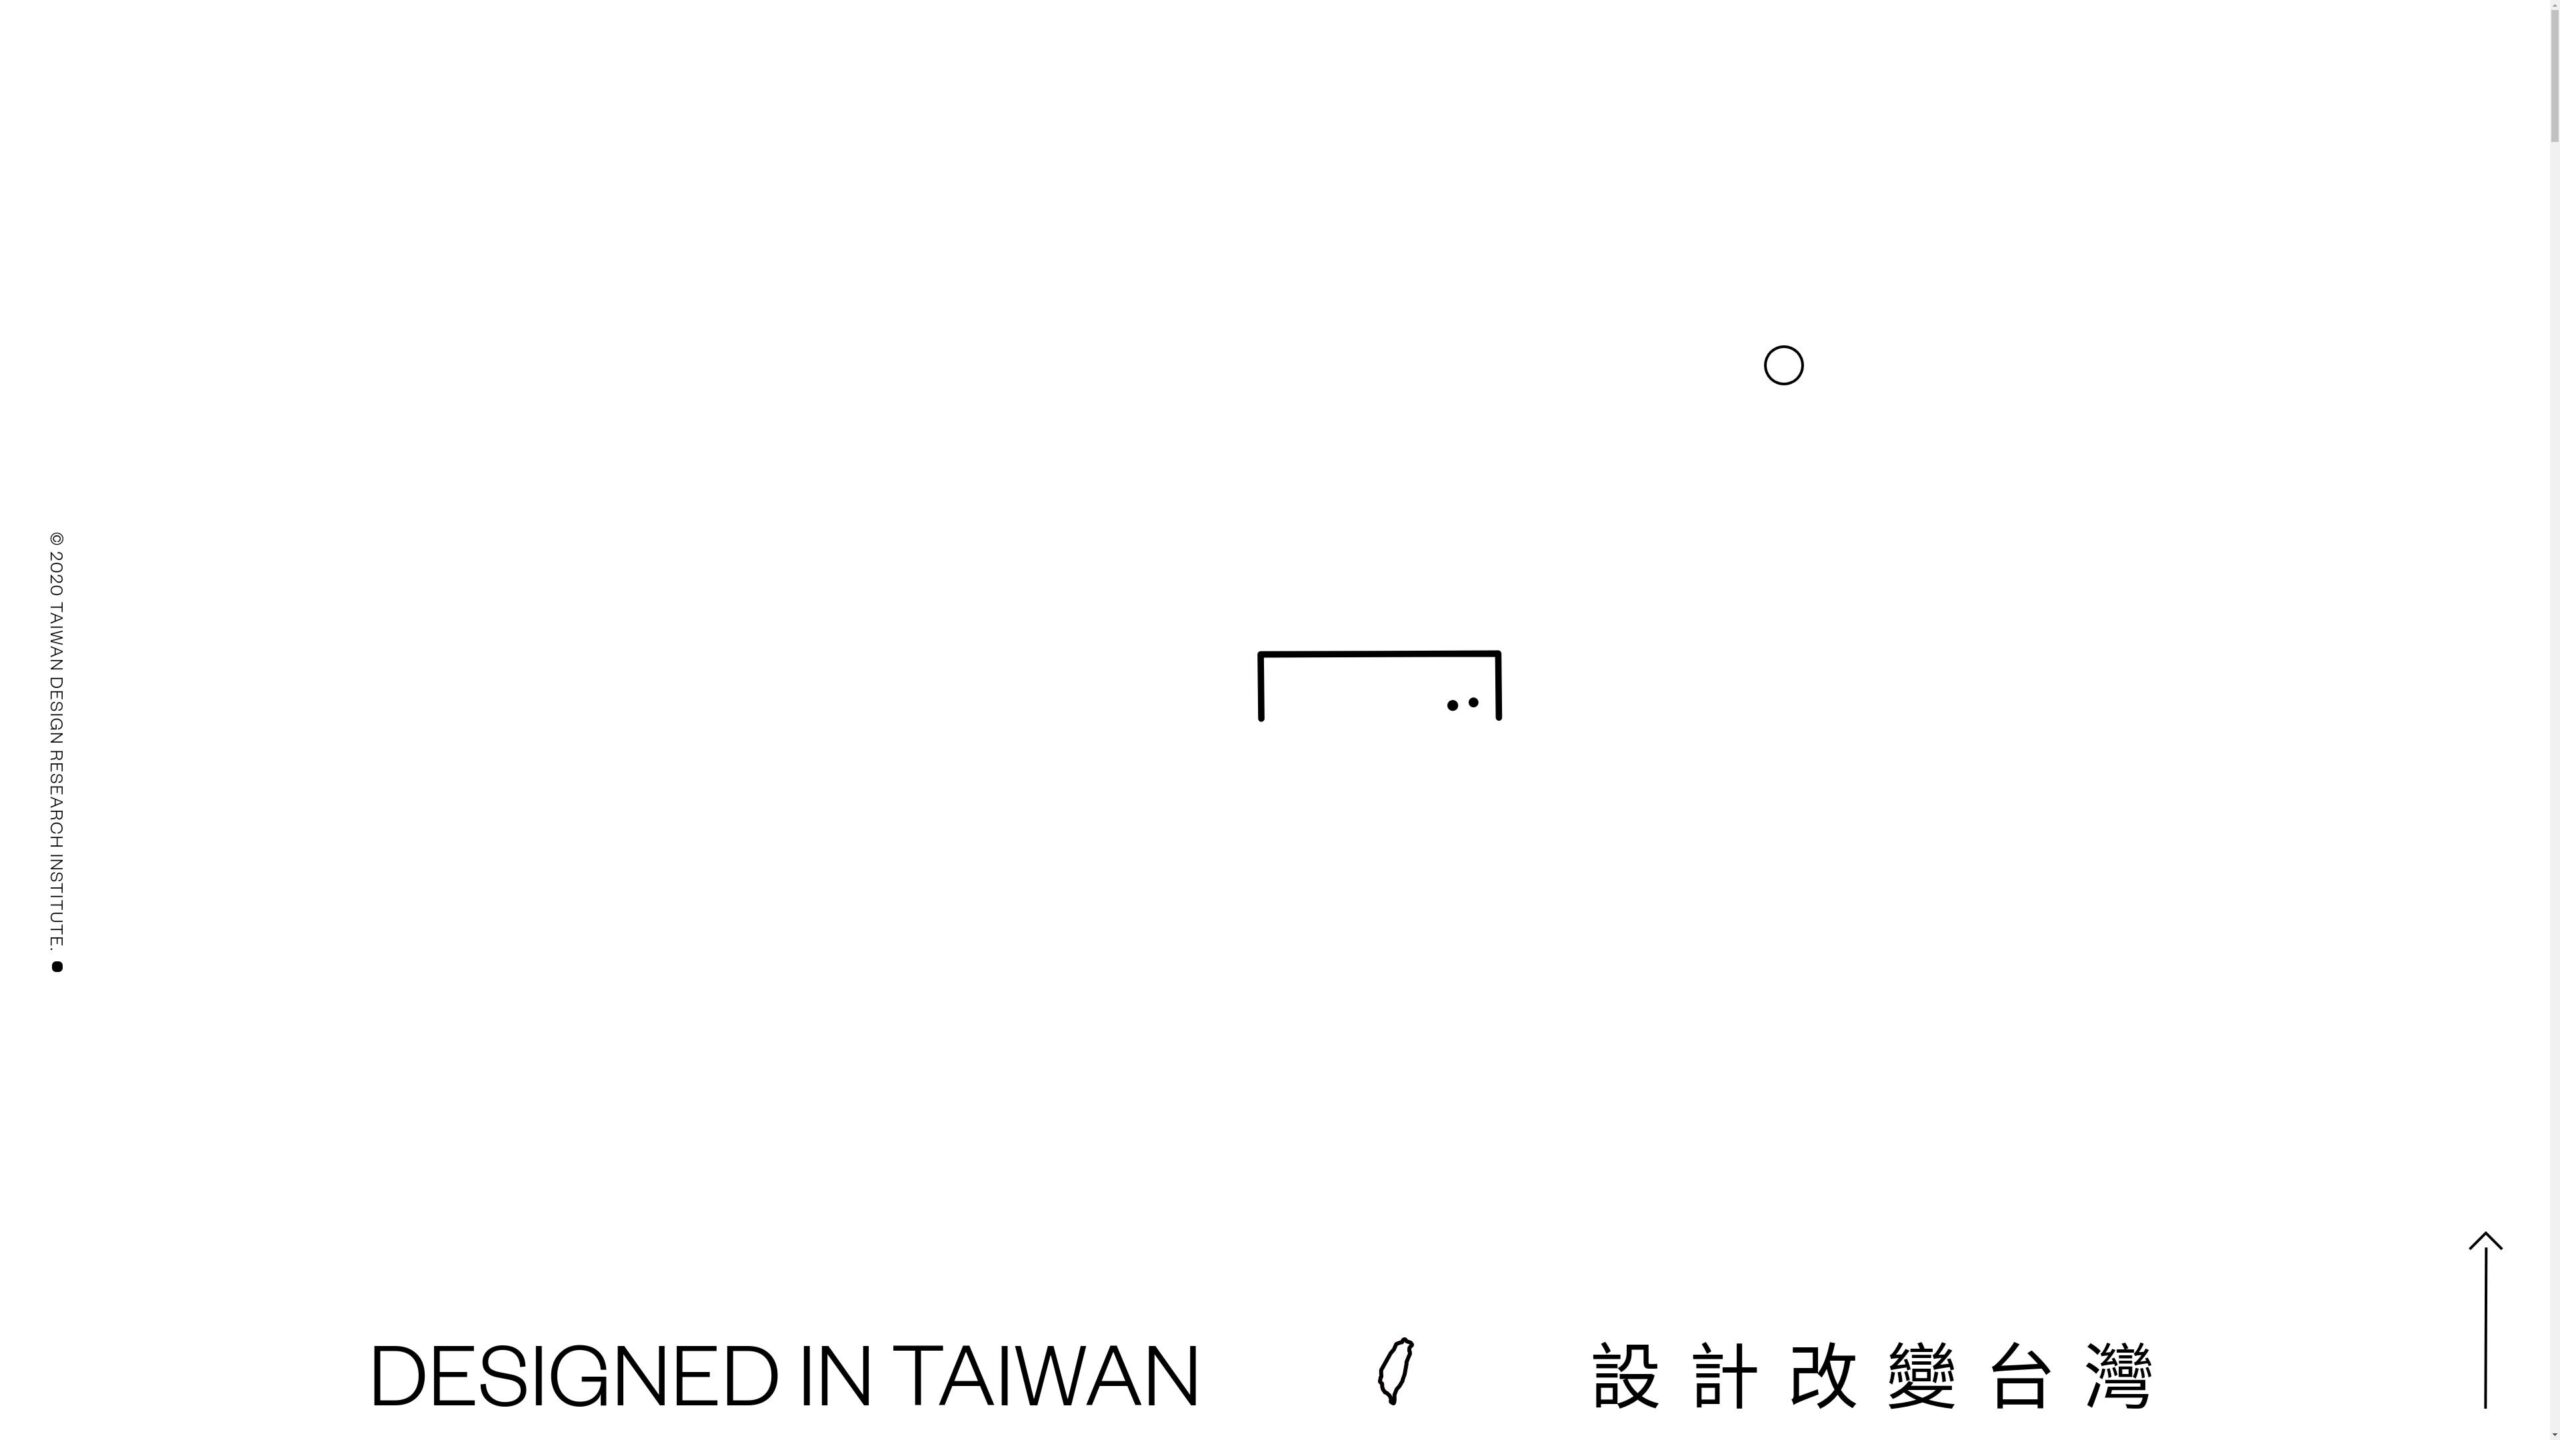 Taiwandesignresearchinstitute - web design awards web design inspiration